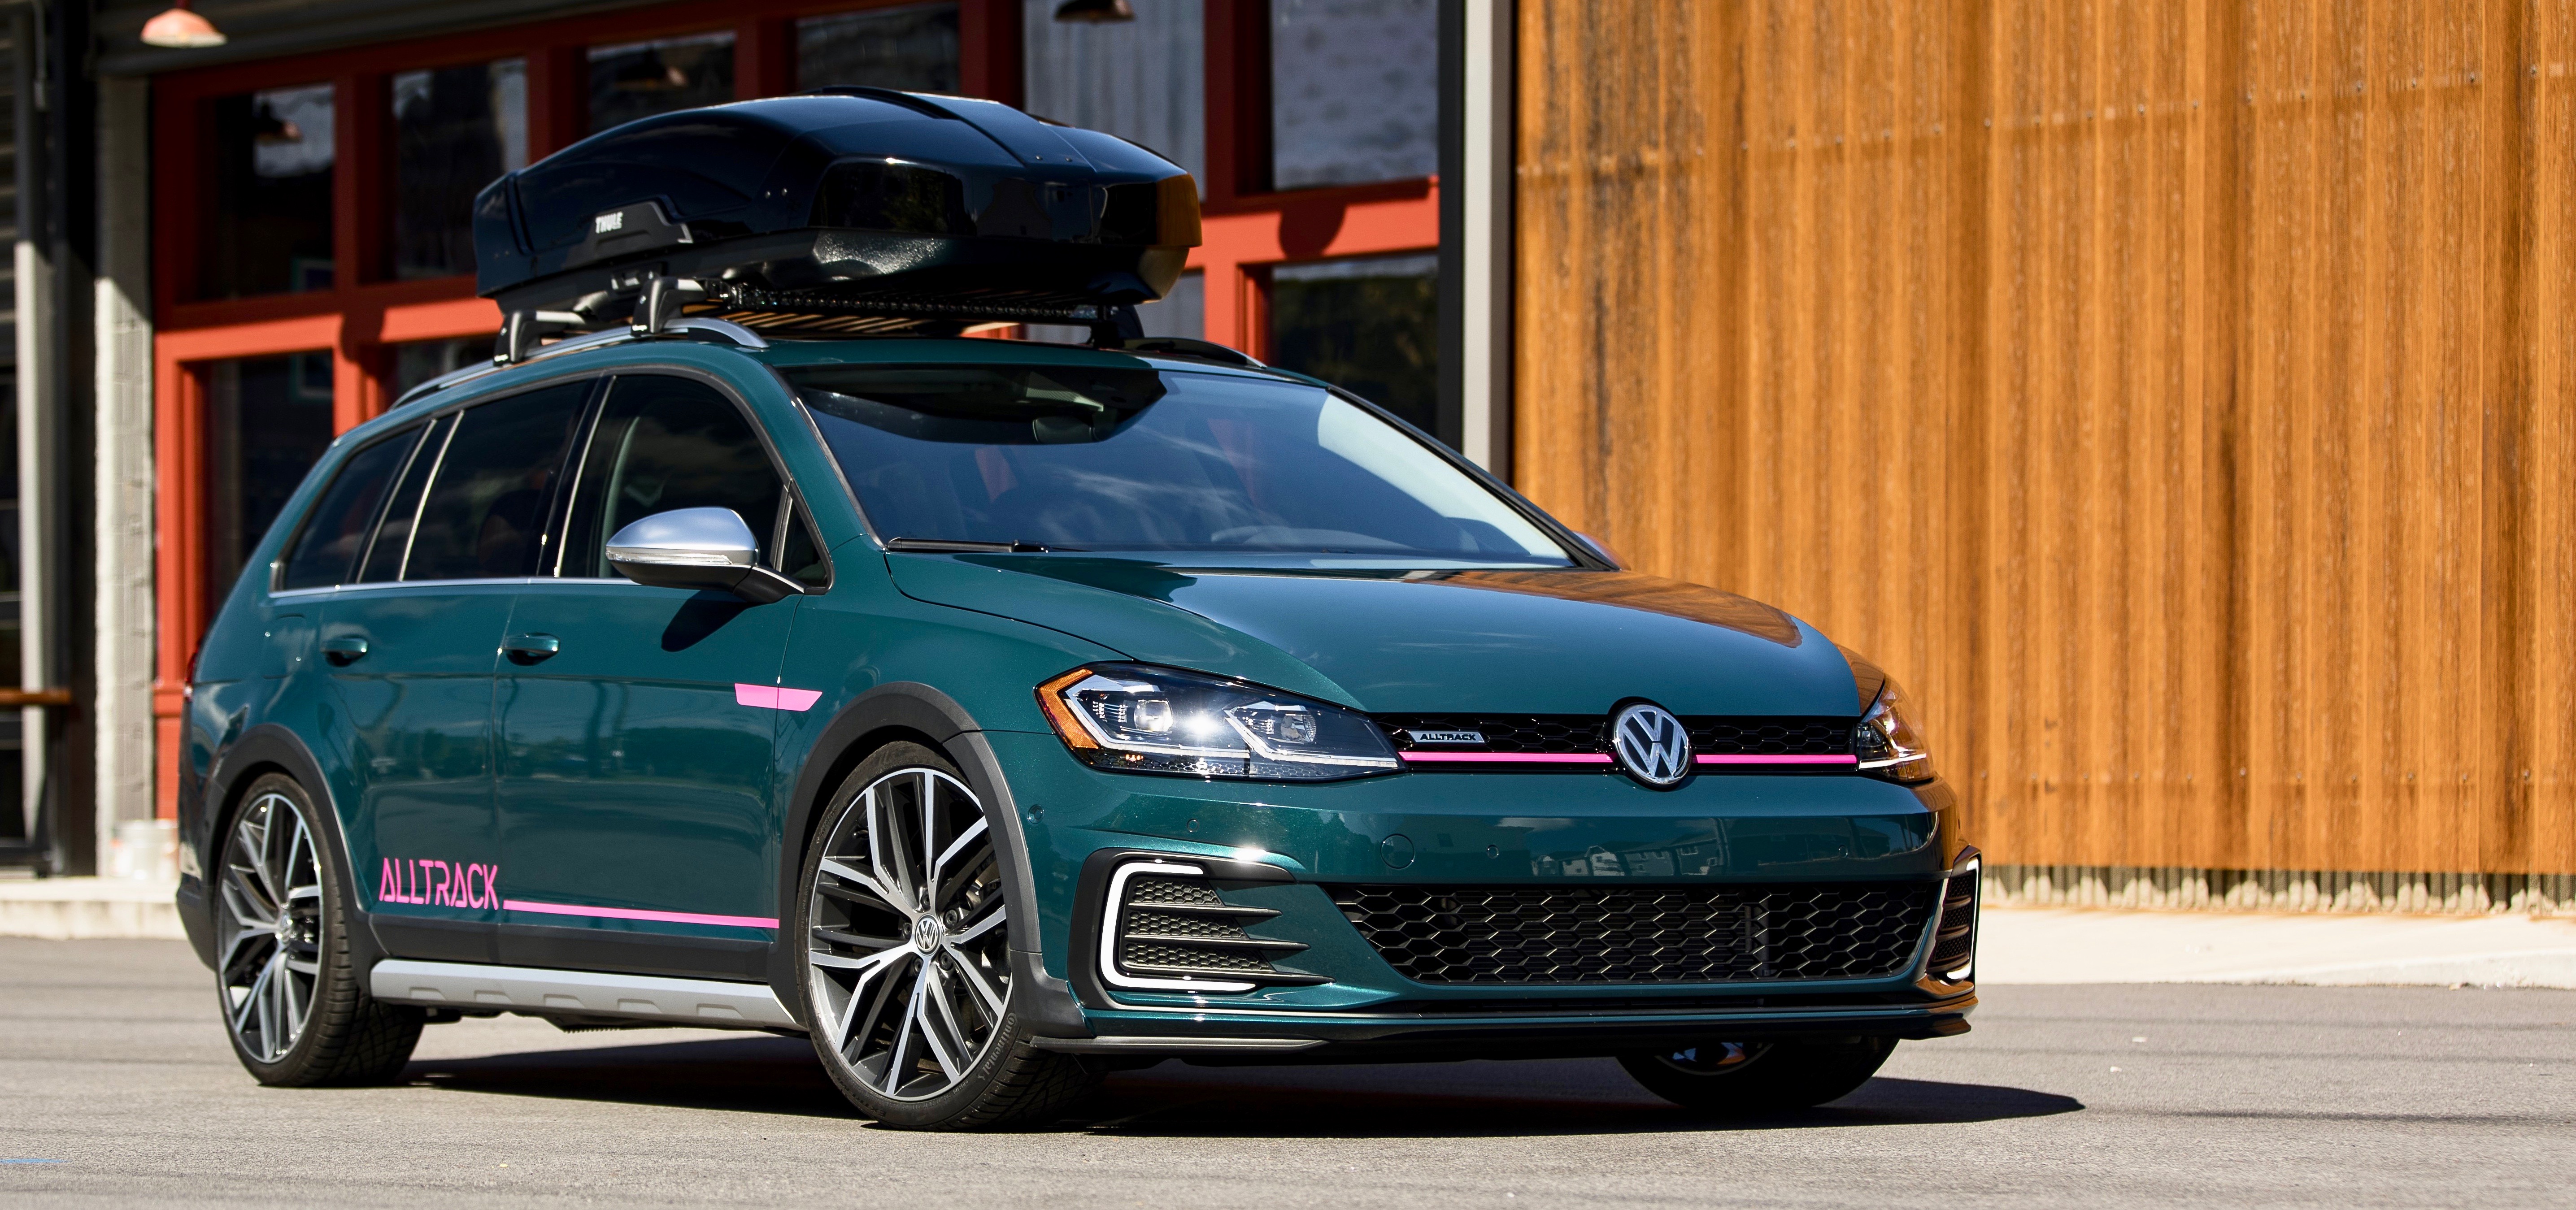 Volkswagen, Volkswagen showcases concepts for potential future classics, ClassicCars.com Journal